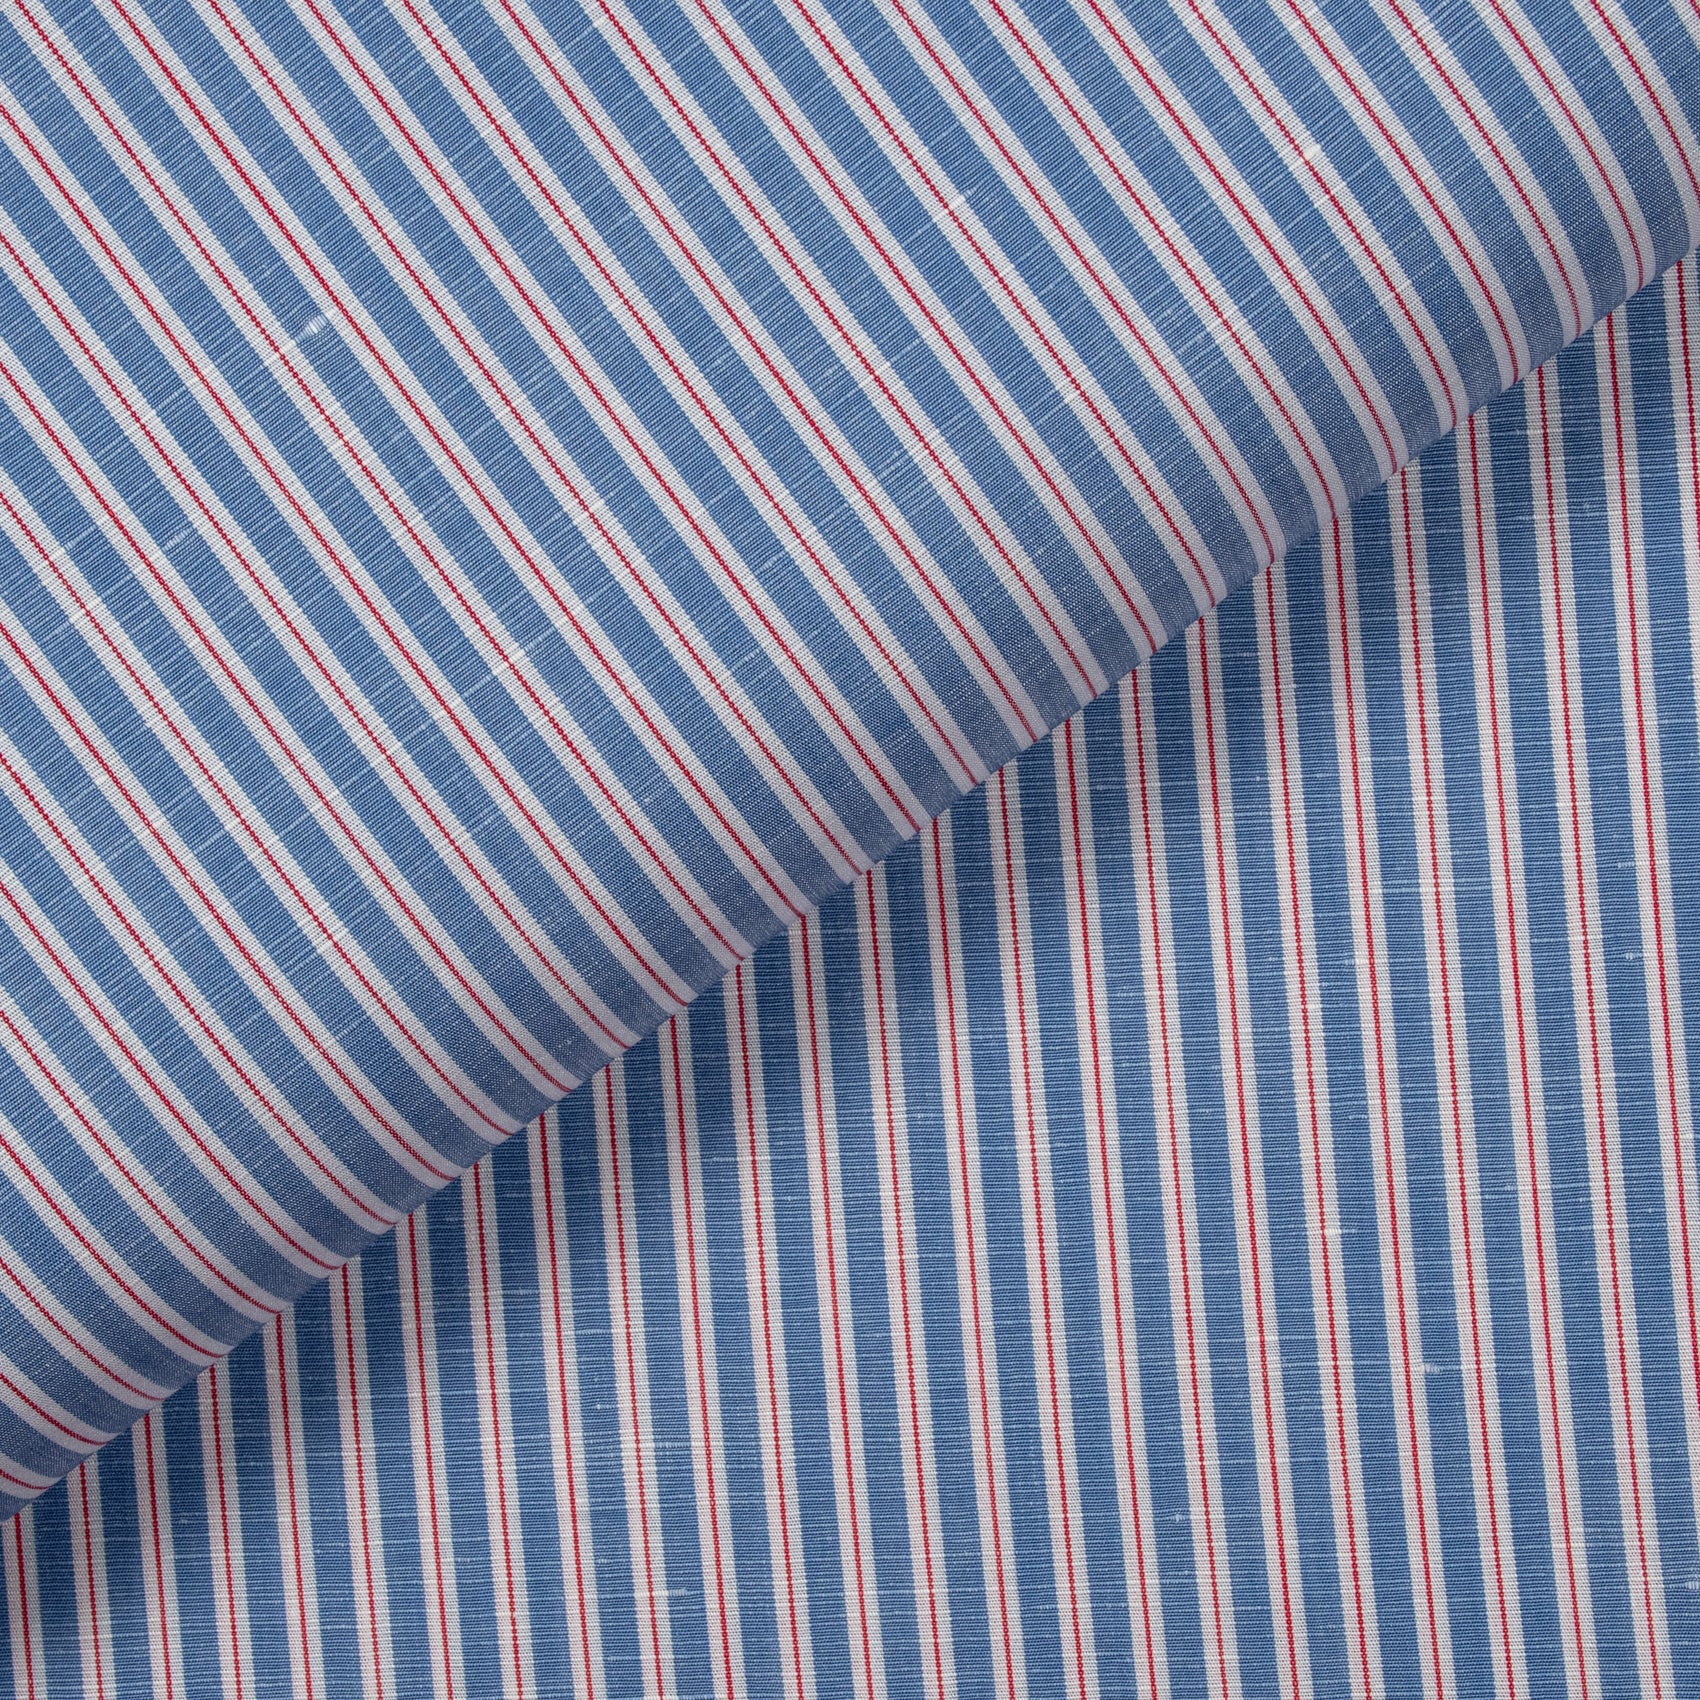 Linda Meander 71 Multi-stripes Cotton/Linen Blend Shirt MFA2116